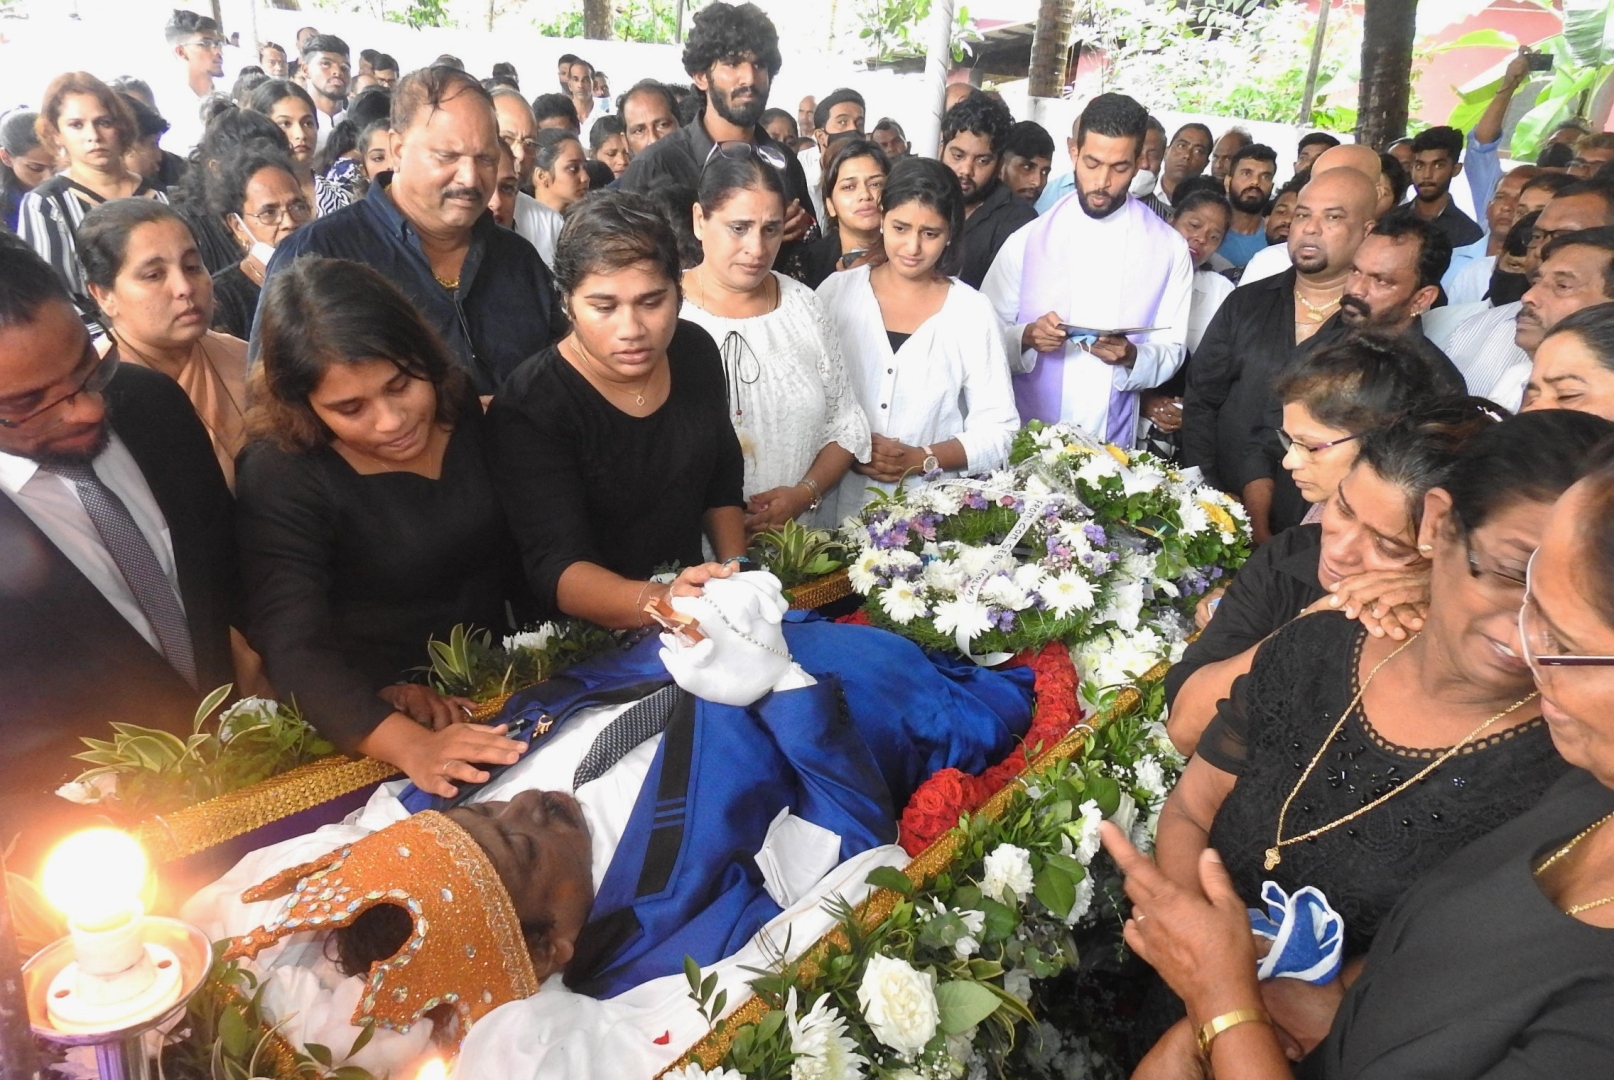 People from all walks of life bid tearful adieu to 'Tragedy King' Mario Menezes